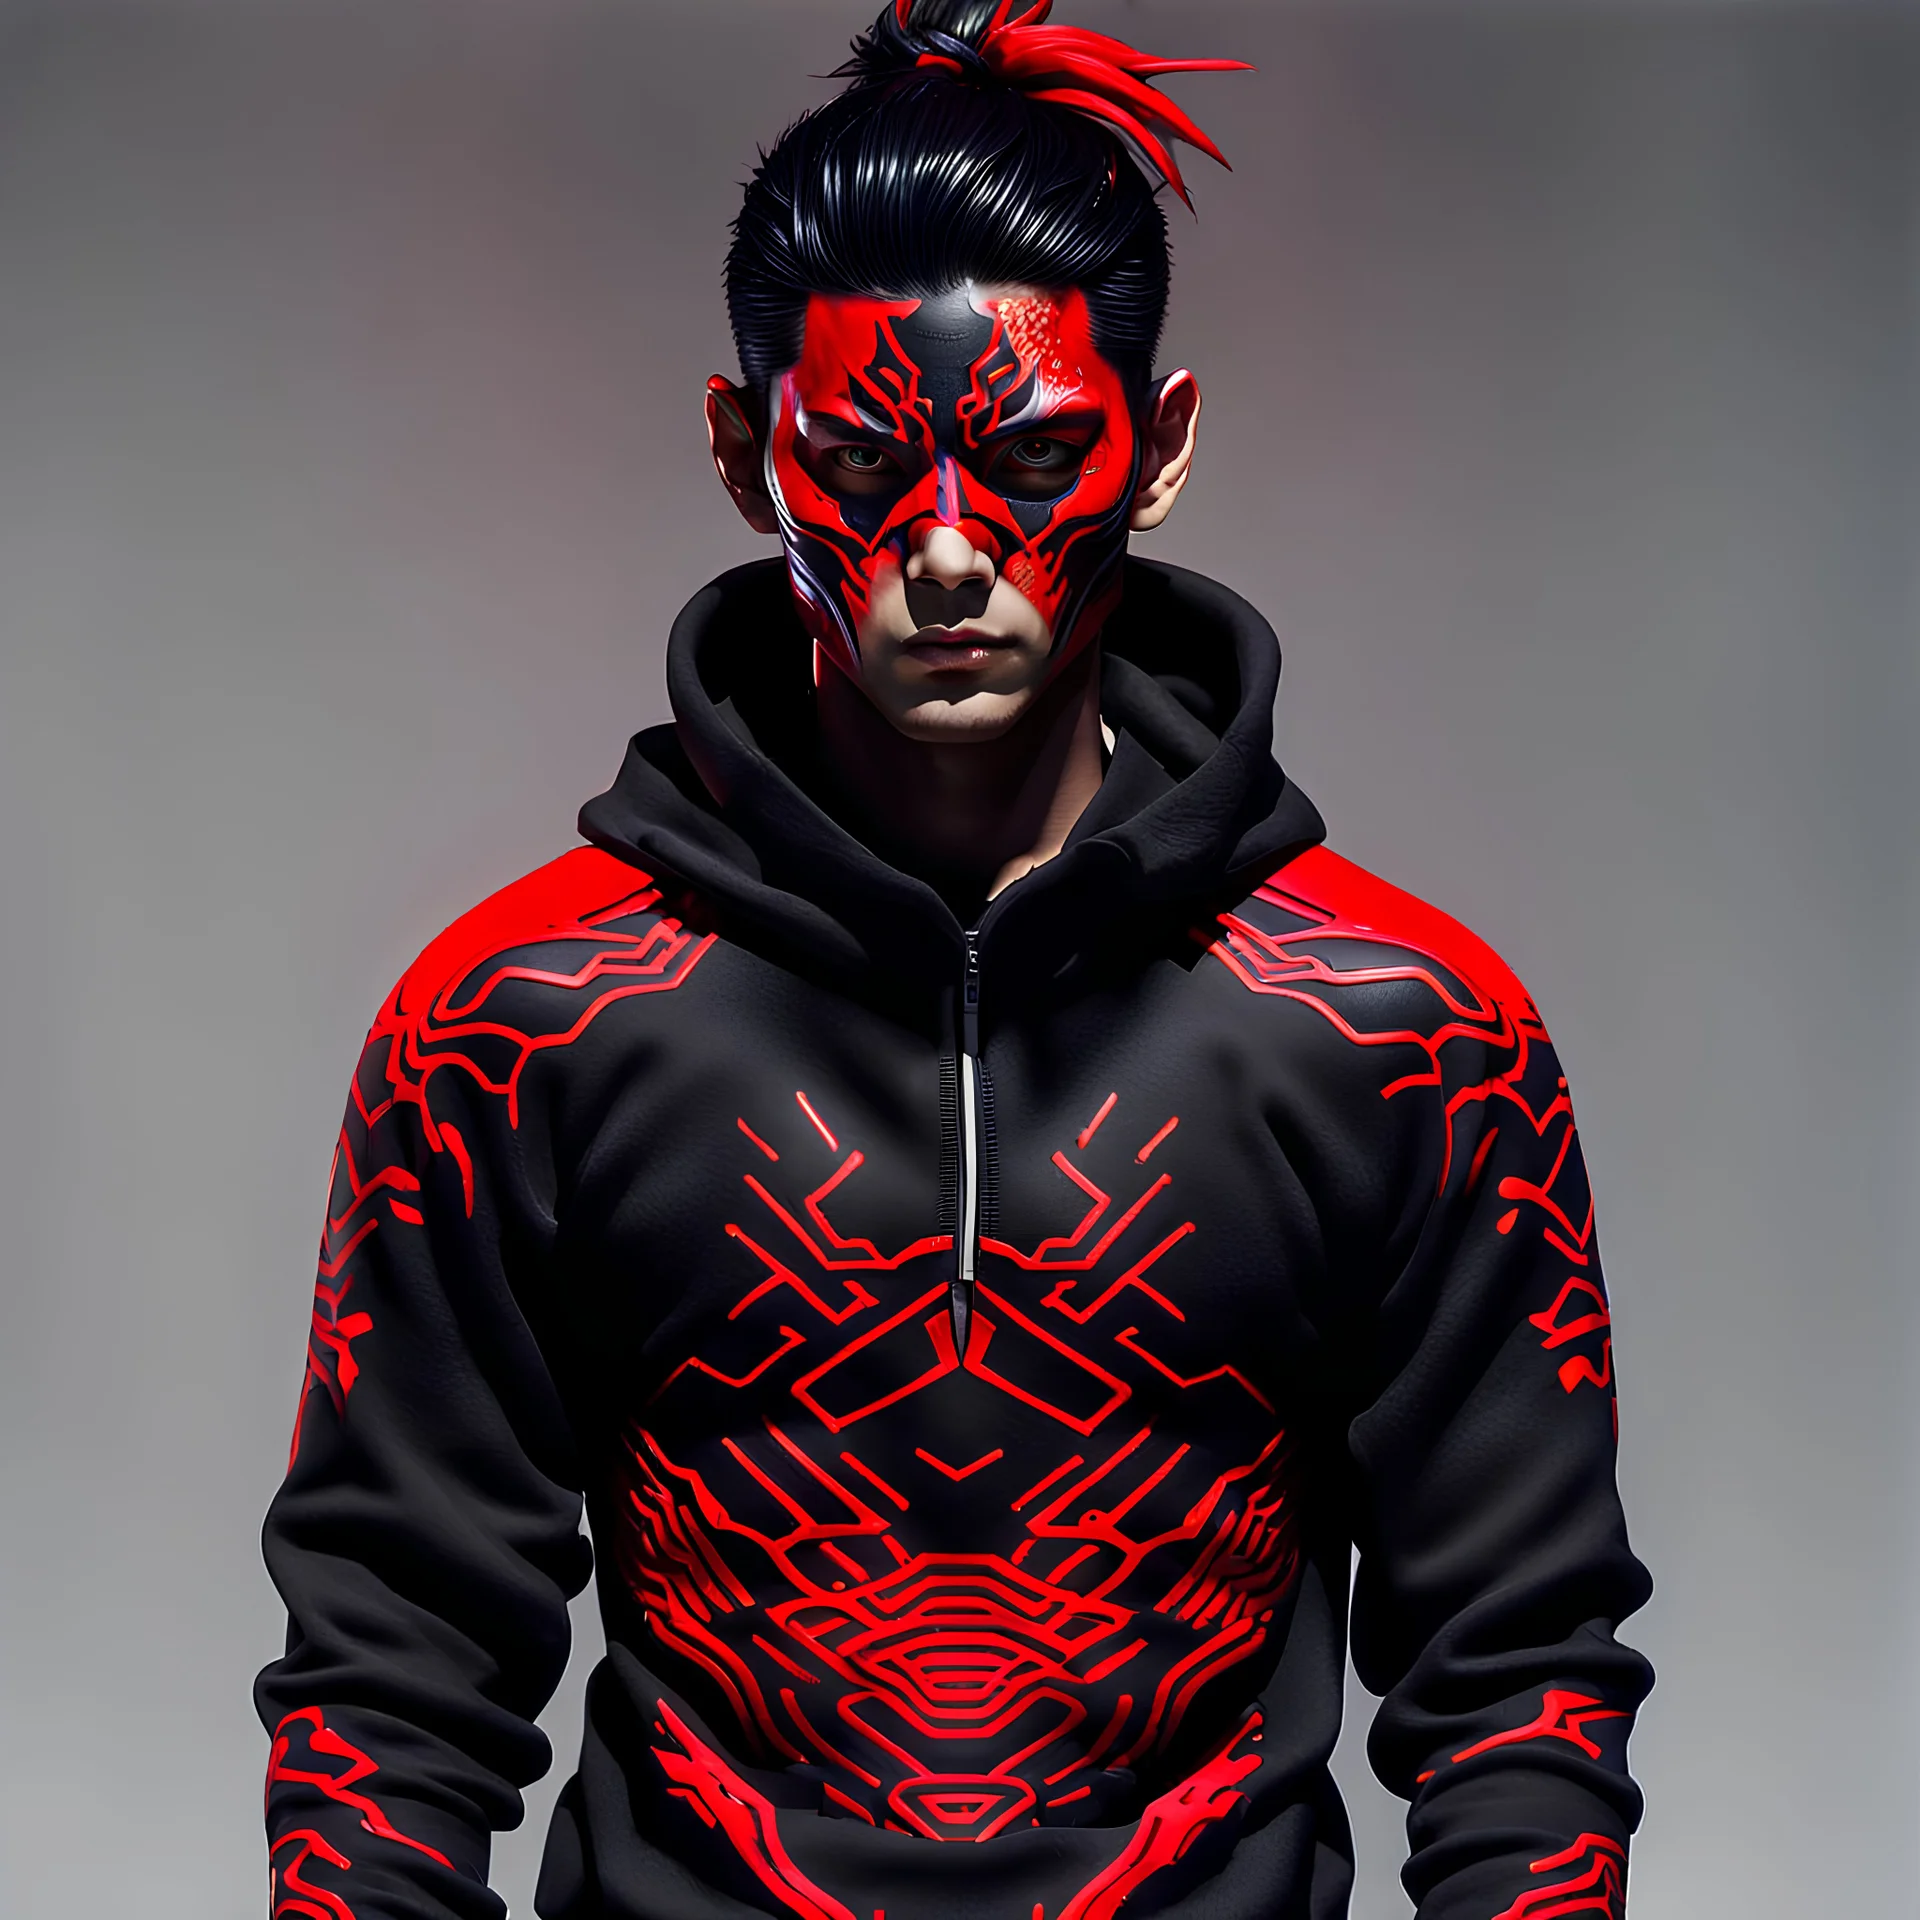 Futuristic male Japanese assassin, red facepaint, black sweatshirt